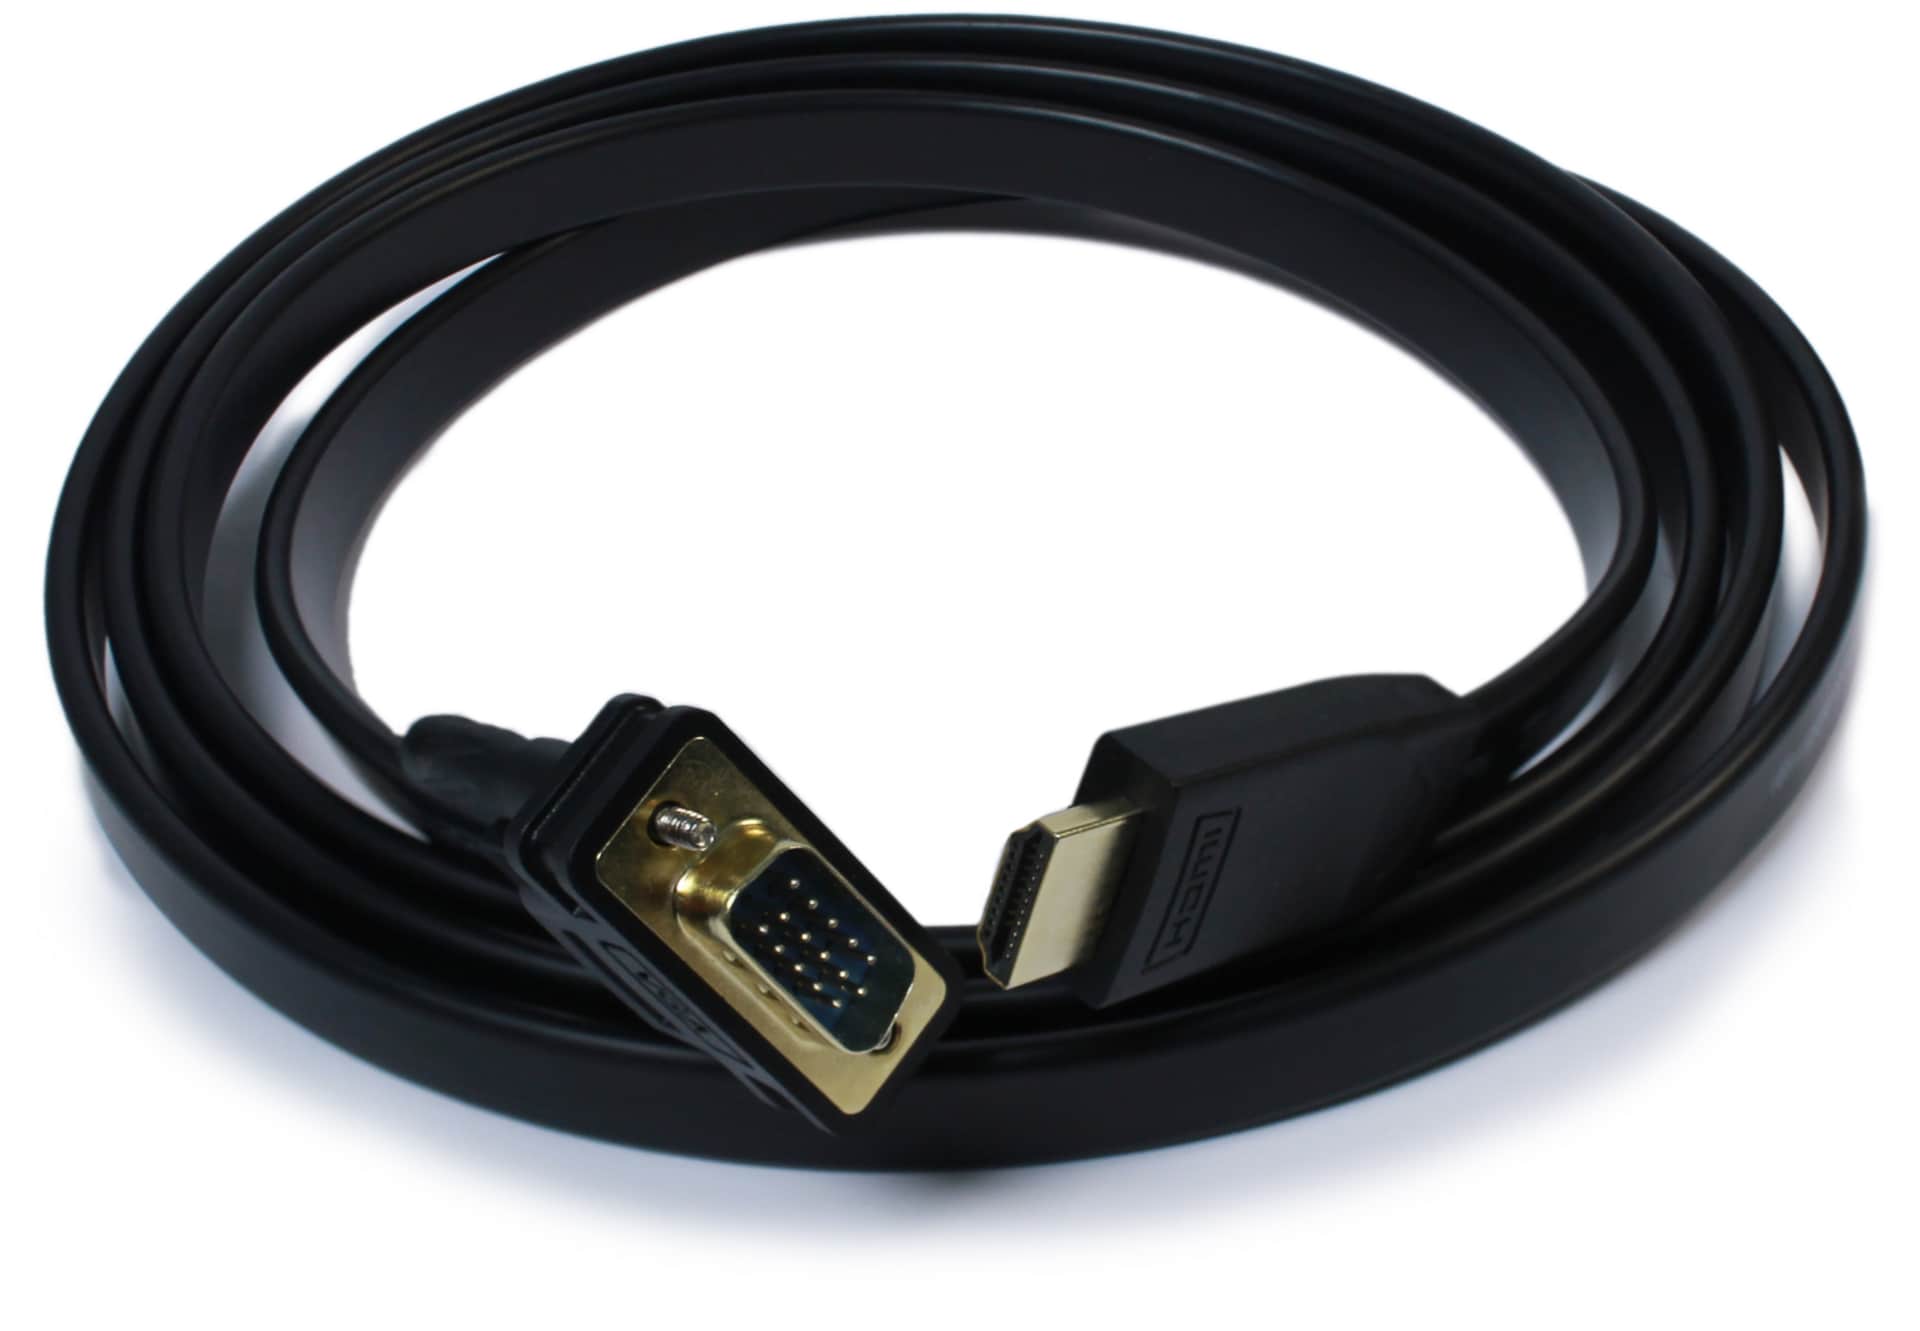 Plugable Monitor Adapter Cable - HDMI to VGA,6ft (1.8m), Driverless